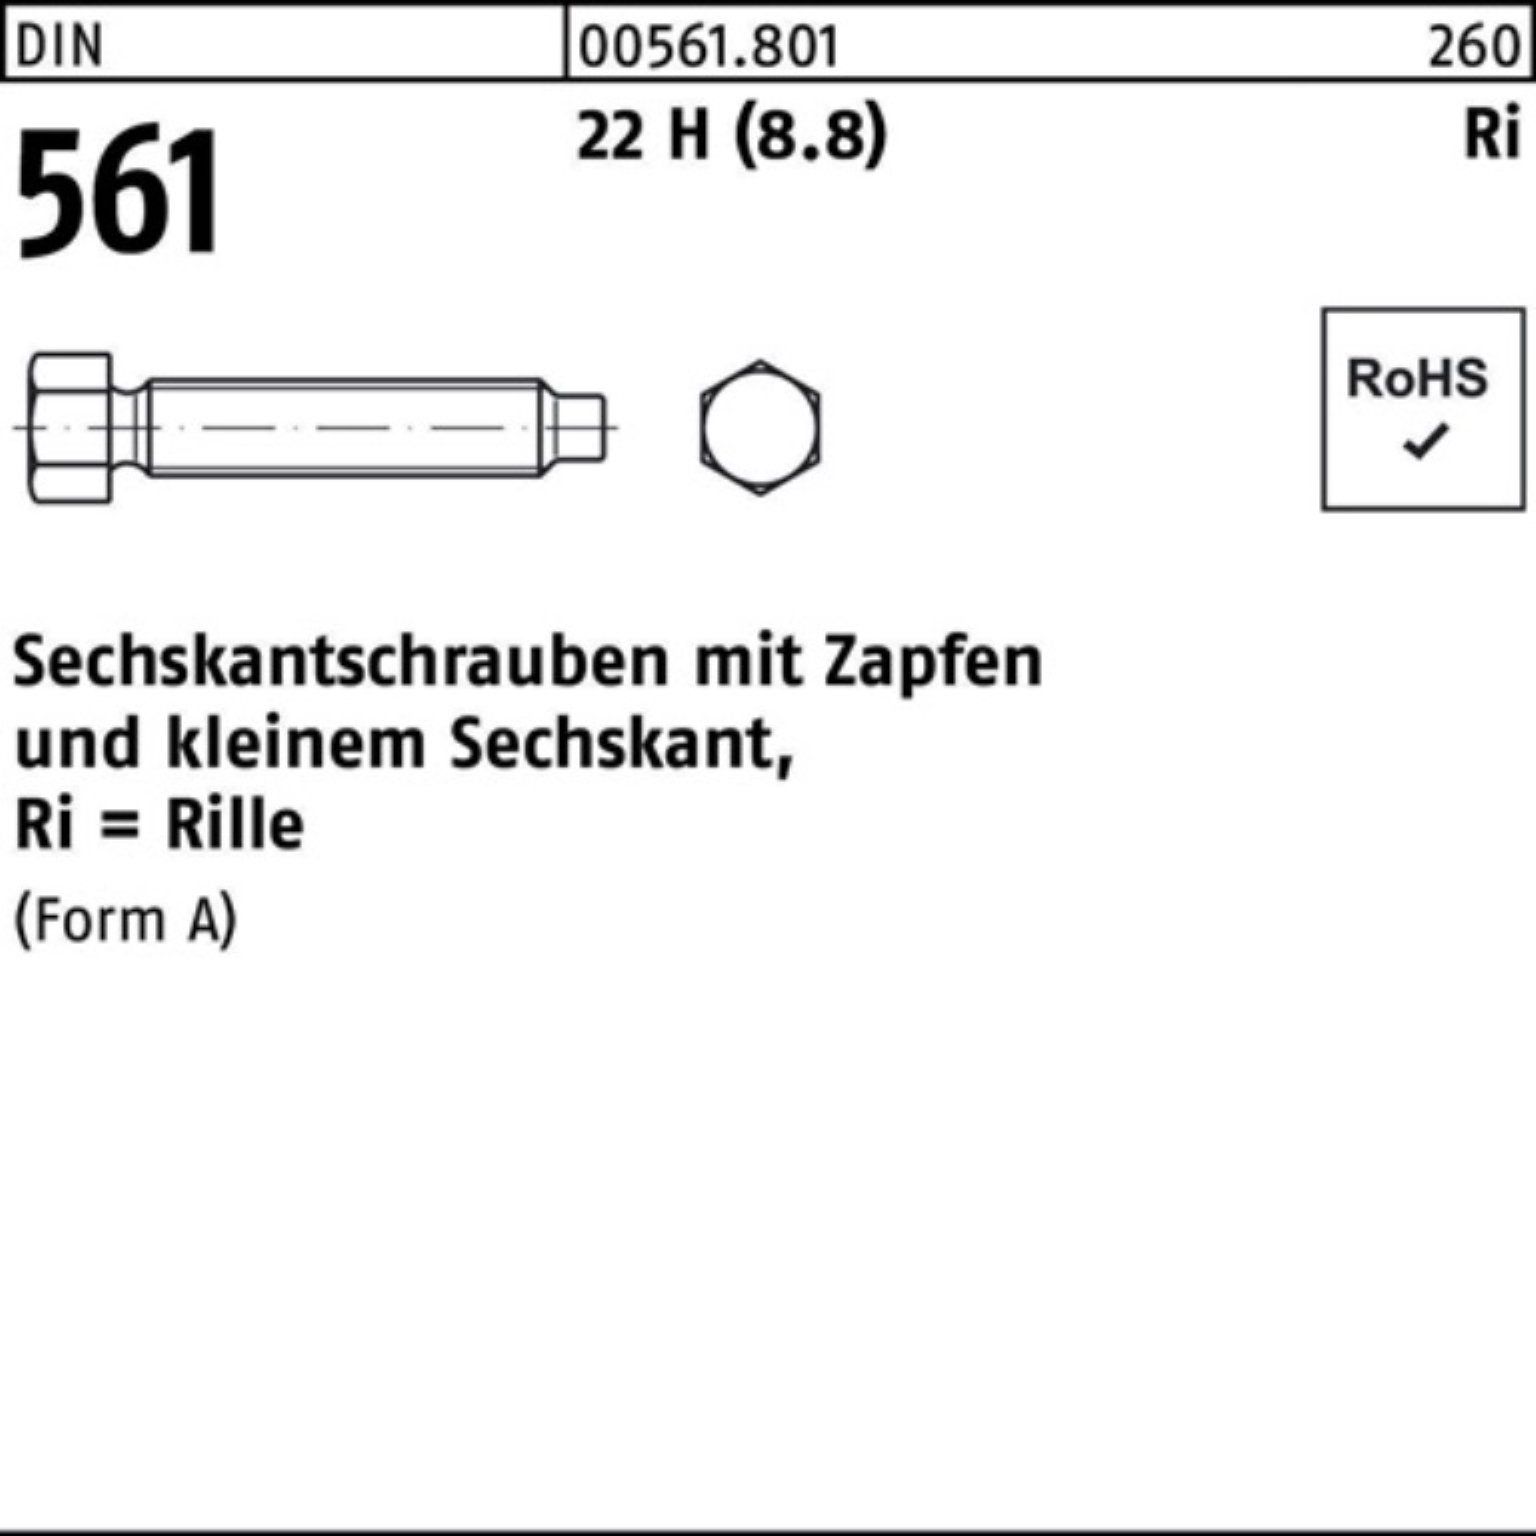 St Sechskantschraube (8.8) 140 Reyher Pack 30x 22 H 1 561 Sechskantschraube 100er DIN AM Zapfen